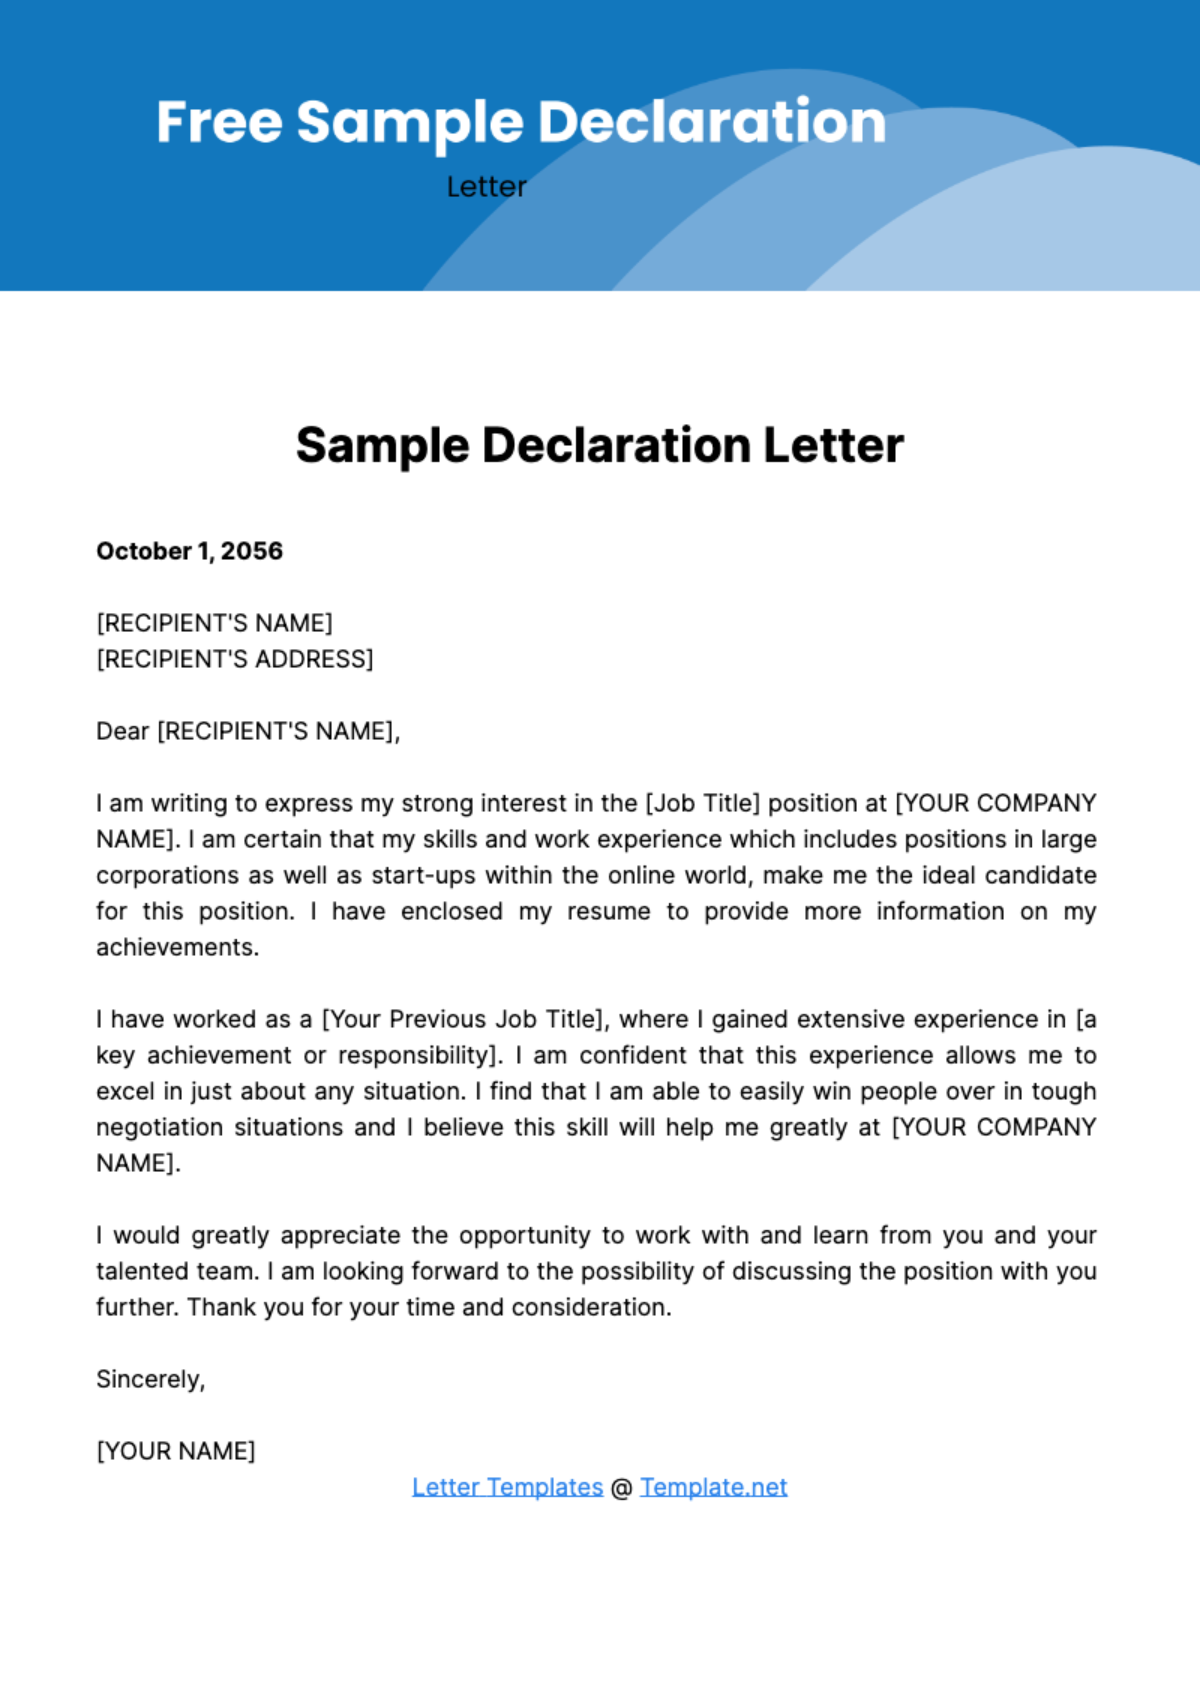 Free Sample Declaration Letter Template